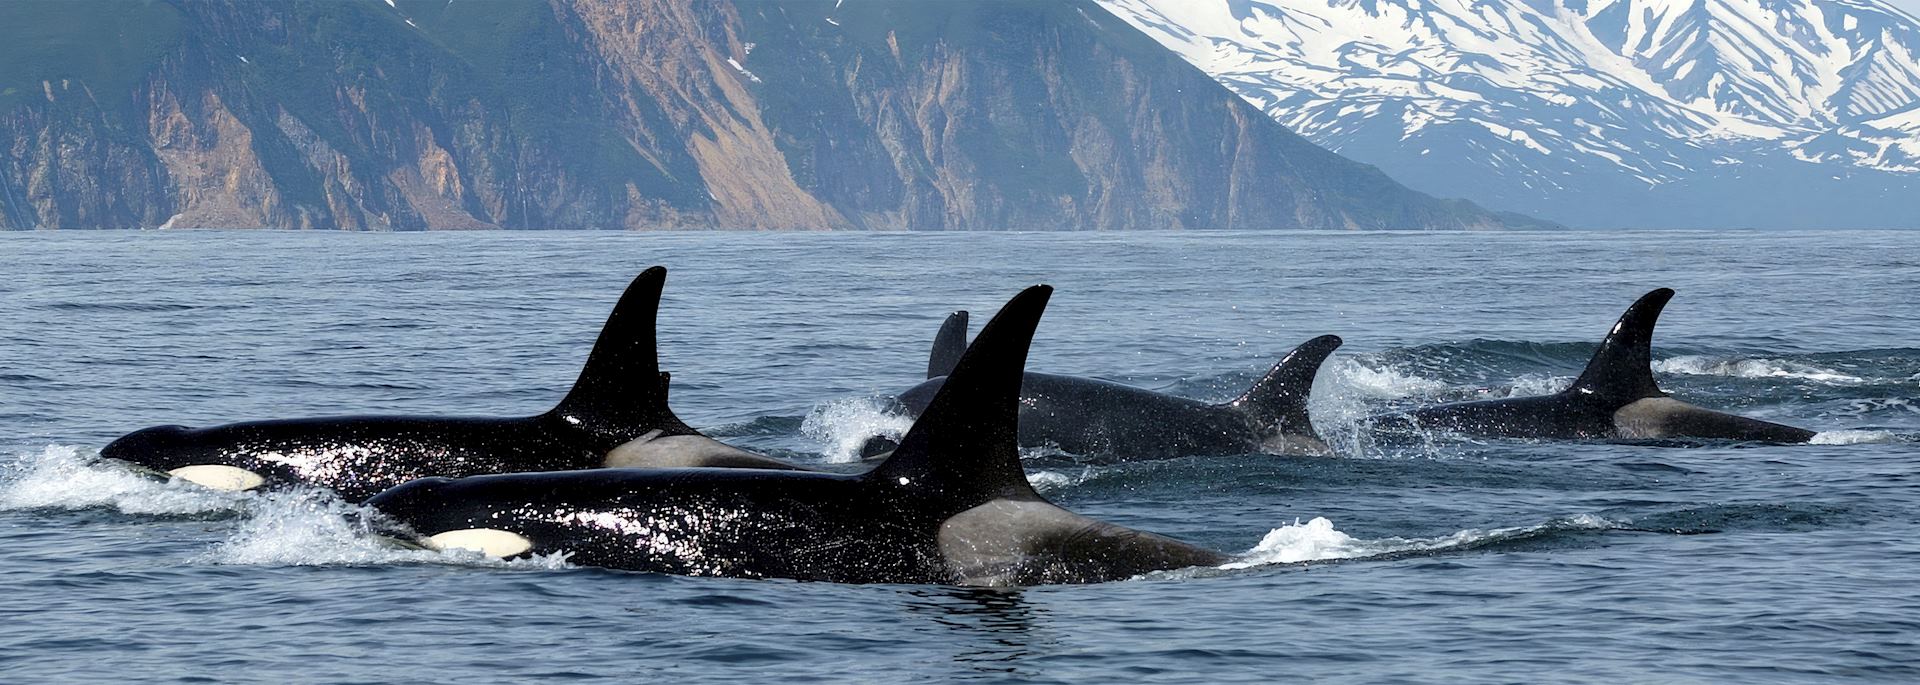 Orca, Vancouver Island